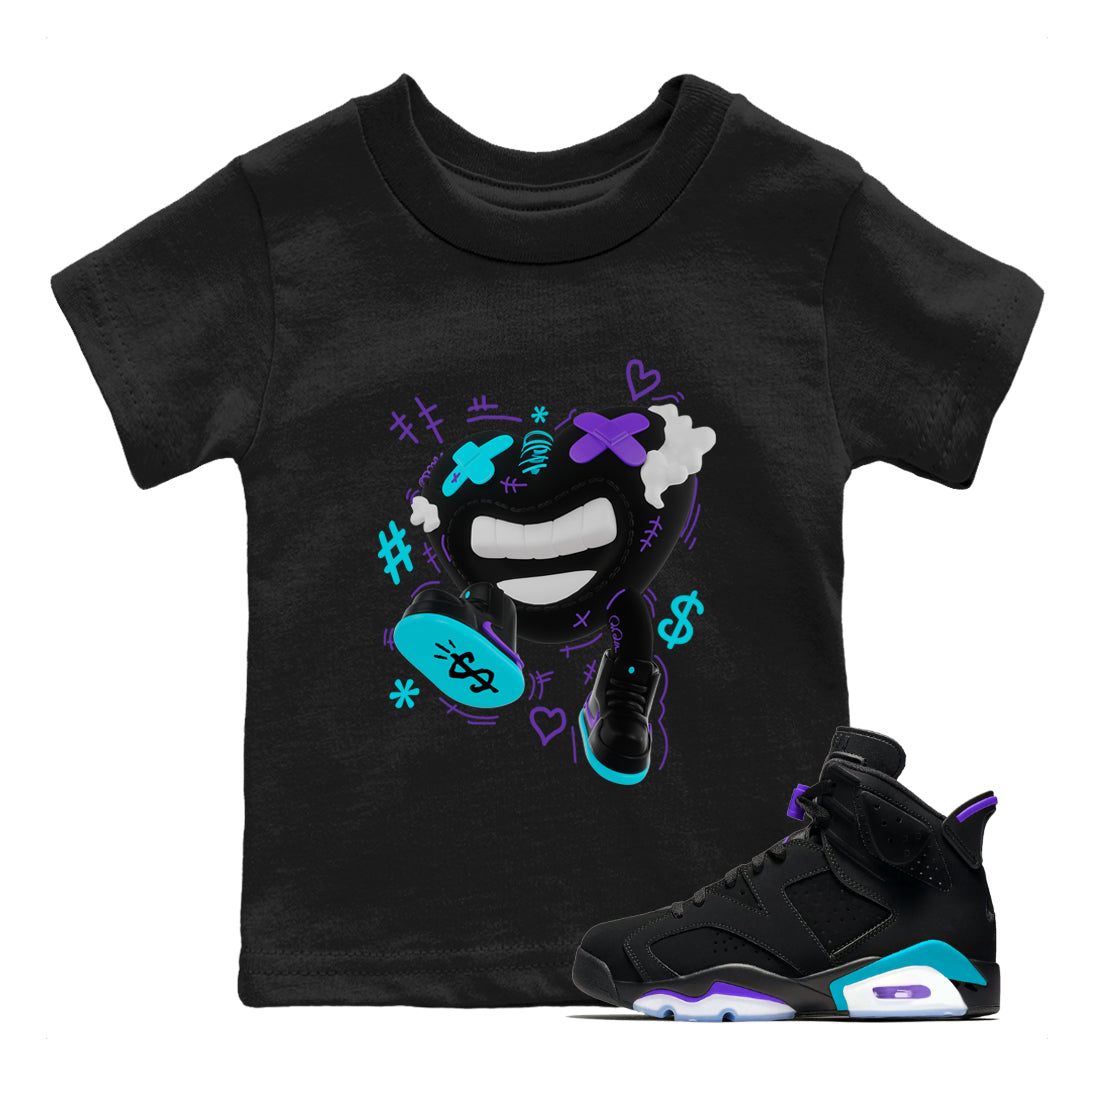 Air Jordan 6 Aqua shirt to match jordans Walk In Love Streetwear Sneaker Shirt AJ6 Aqua Drip Gear Zone Sneaker Matching Clothing Baby Toddler Black 1 T-Shirt